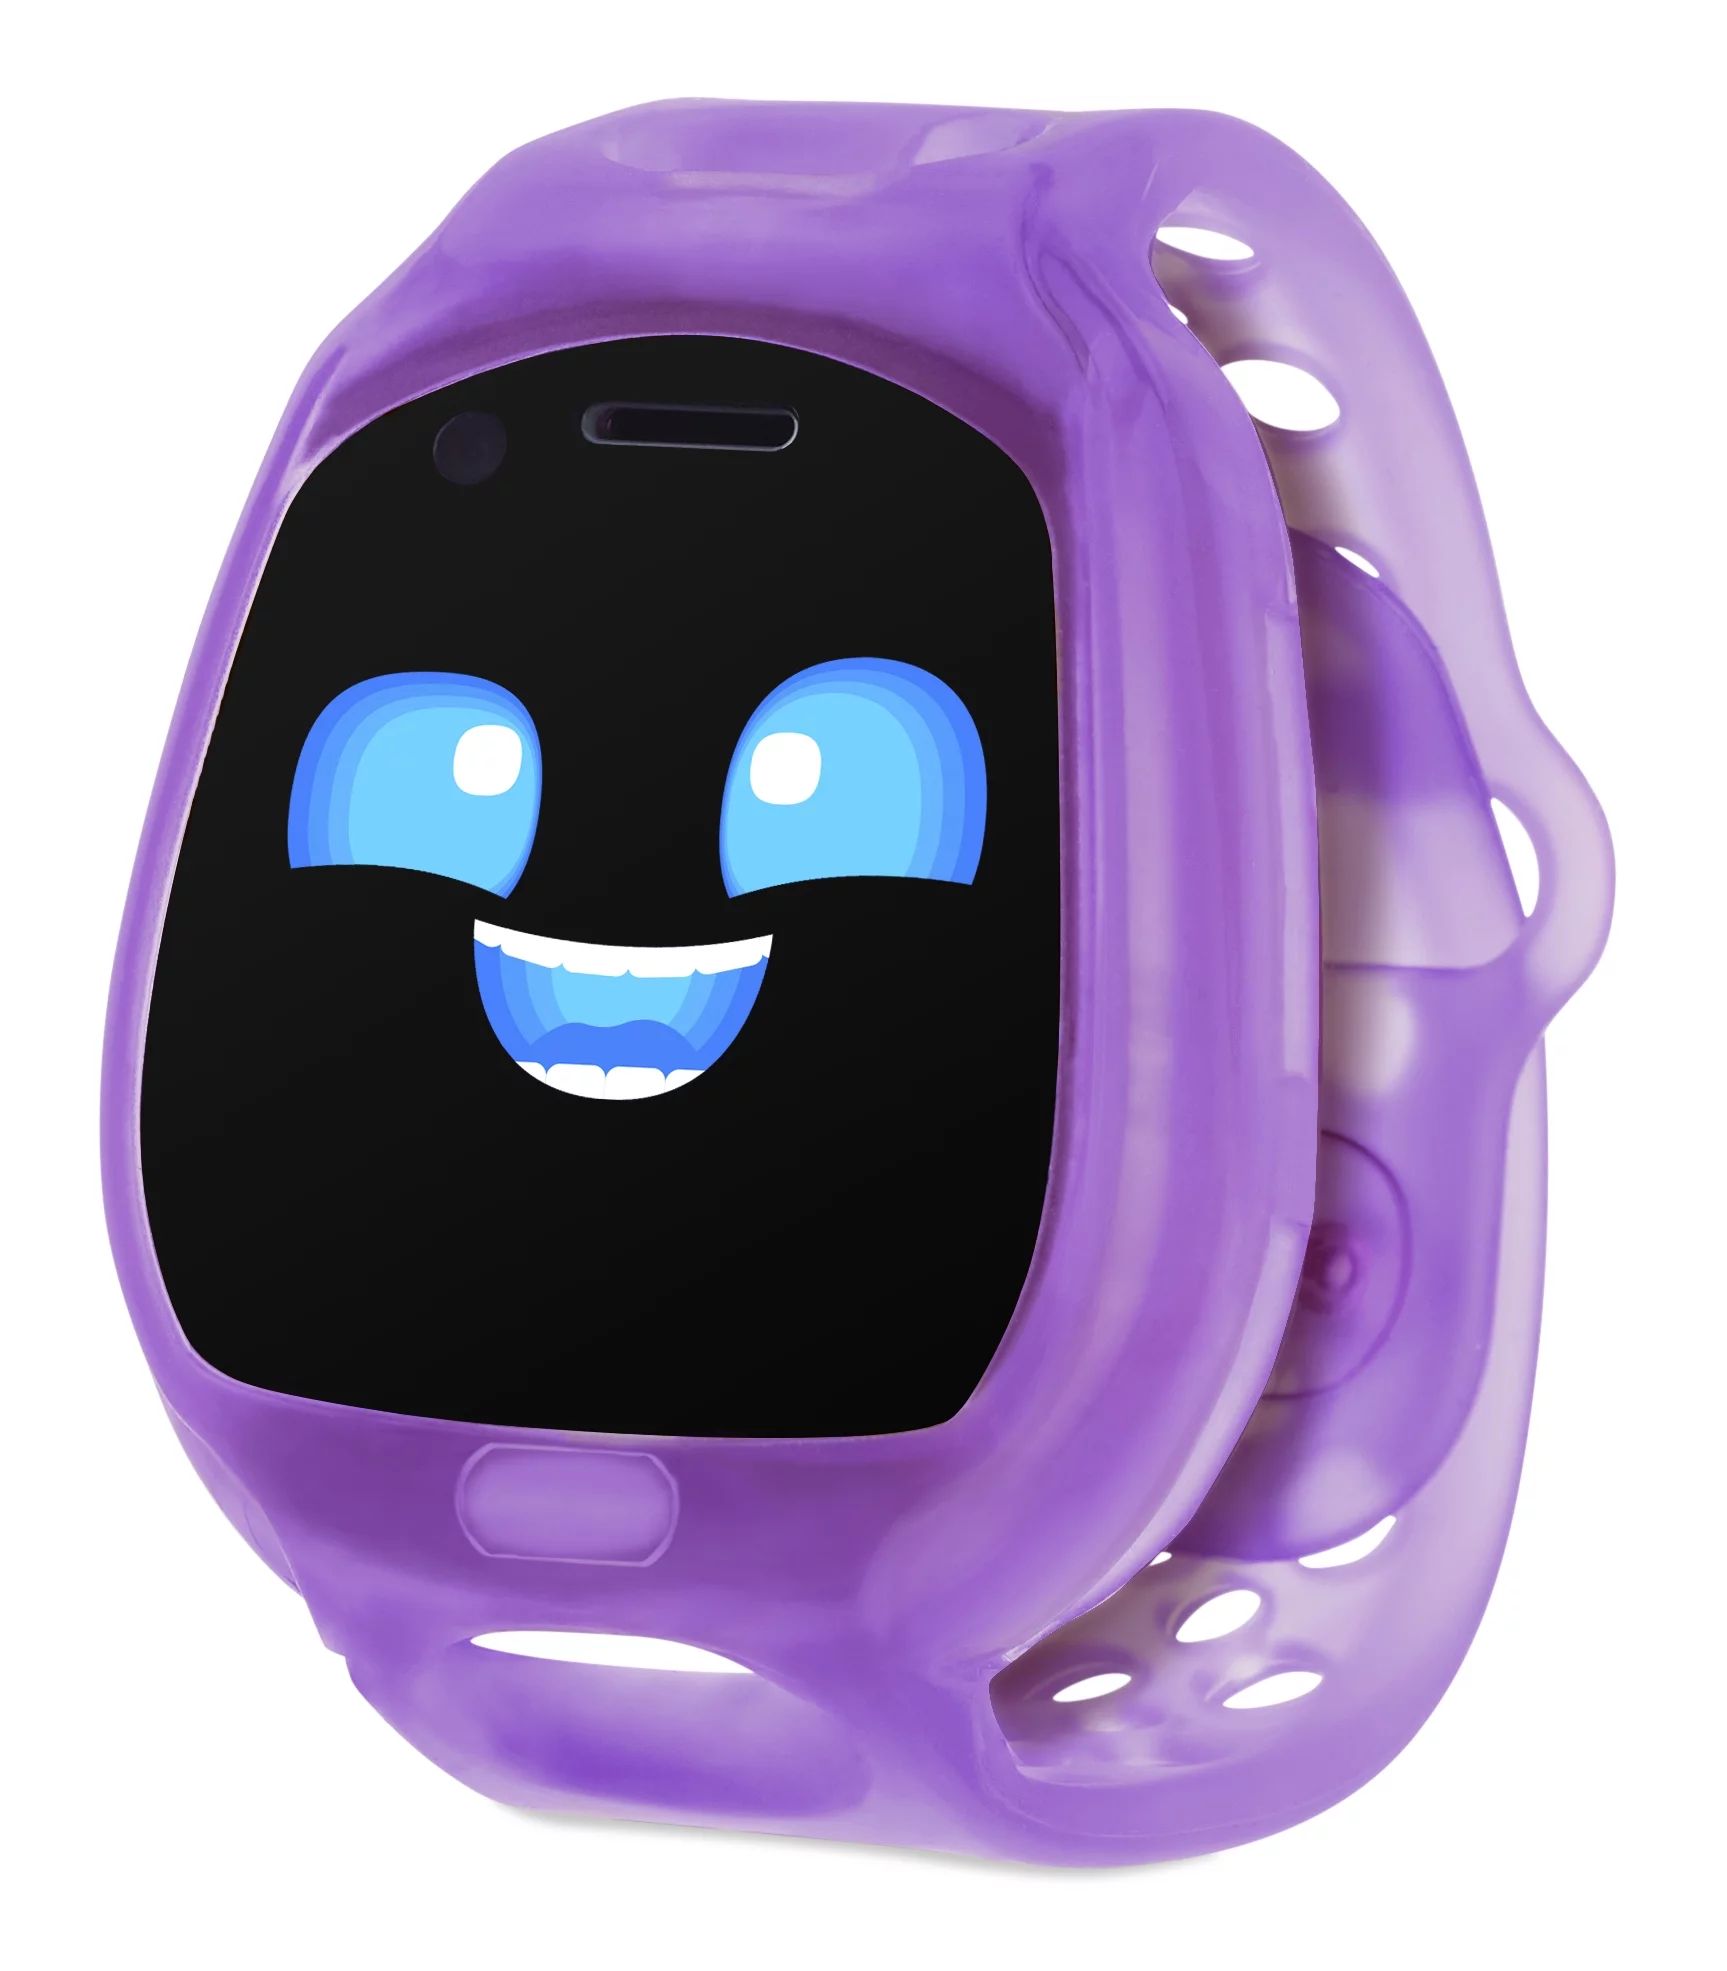 Little Tikes Tobi 2 Robot Purple Smartwatch- 2 Cameras w Interactive Robot Games, Videos, Selfies... | Walmart (US)